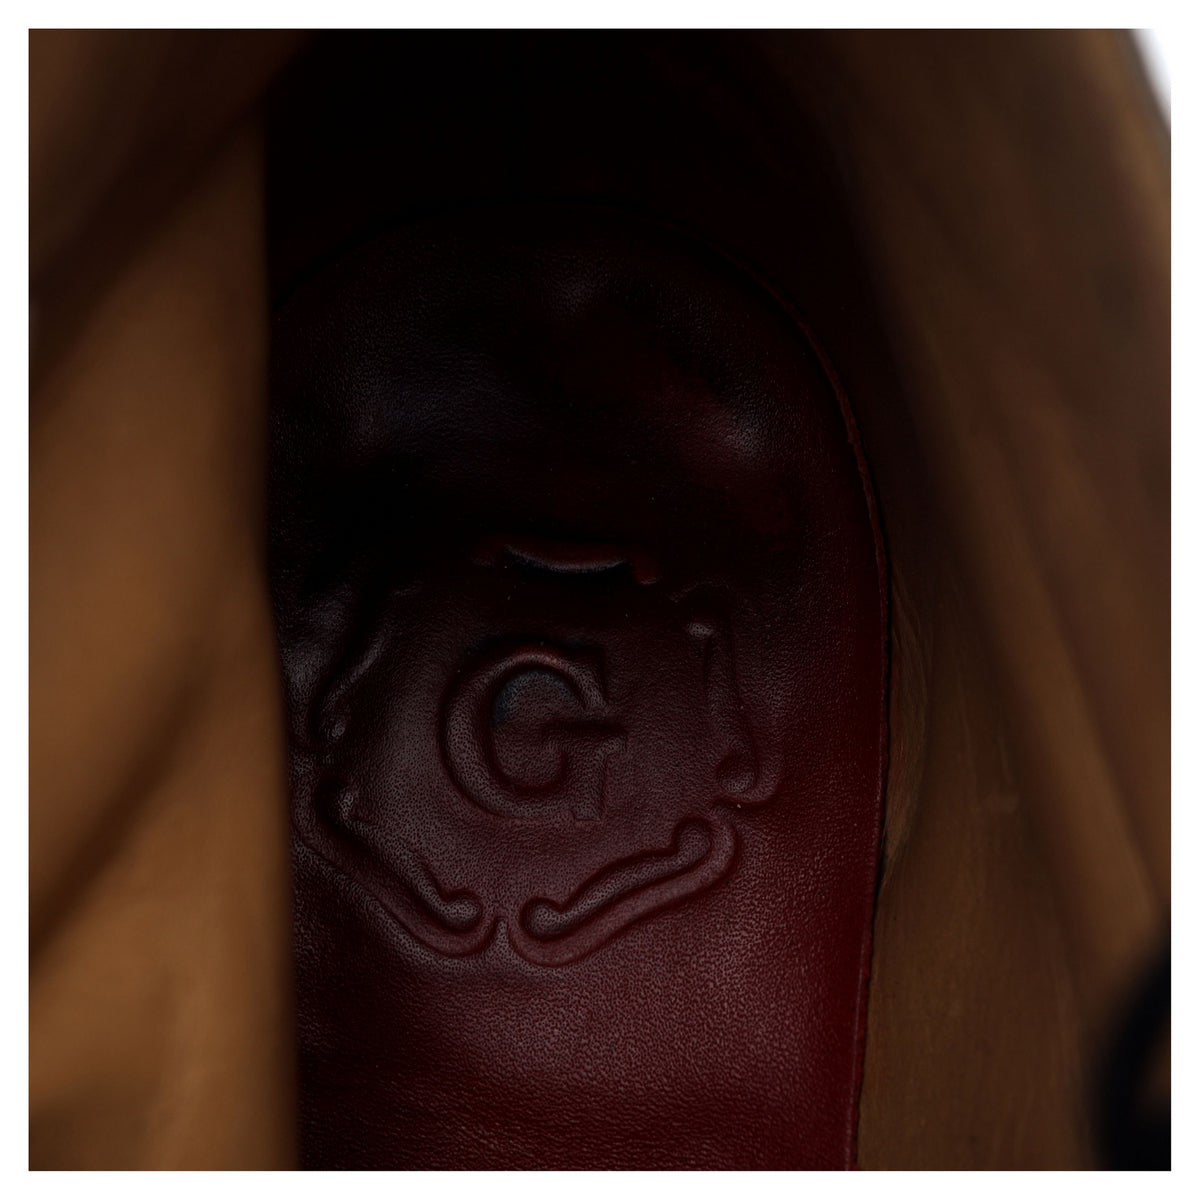 &#39;Sharp&#39; Black Leather Brogue Boots UK 6 G